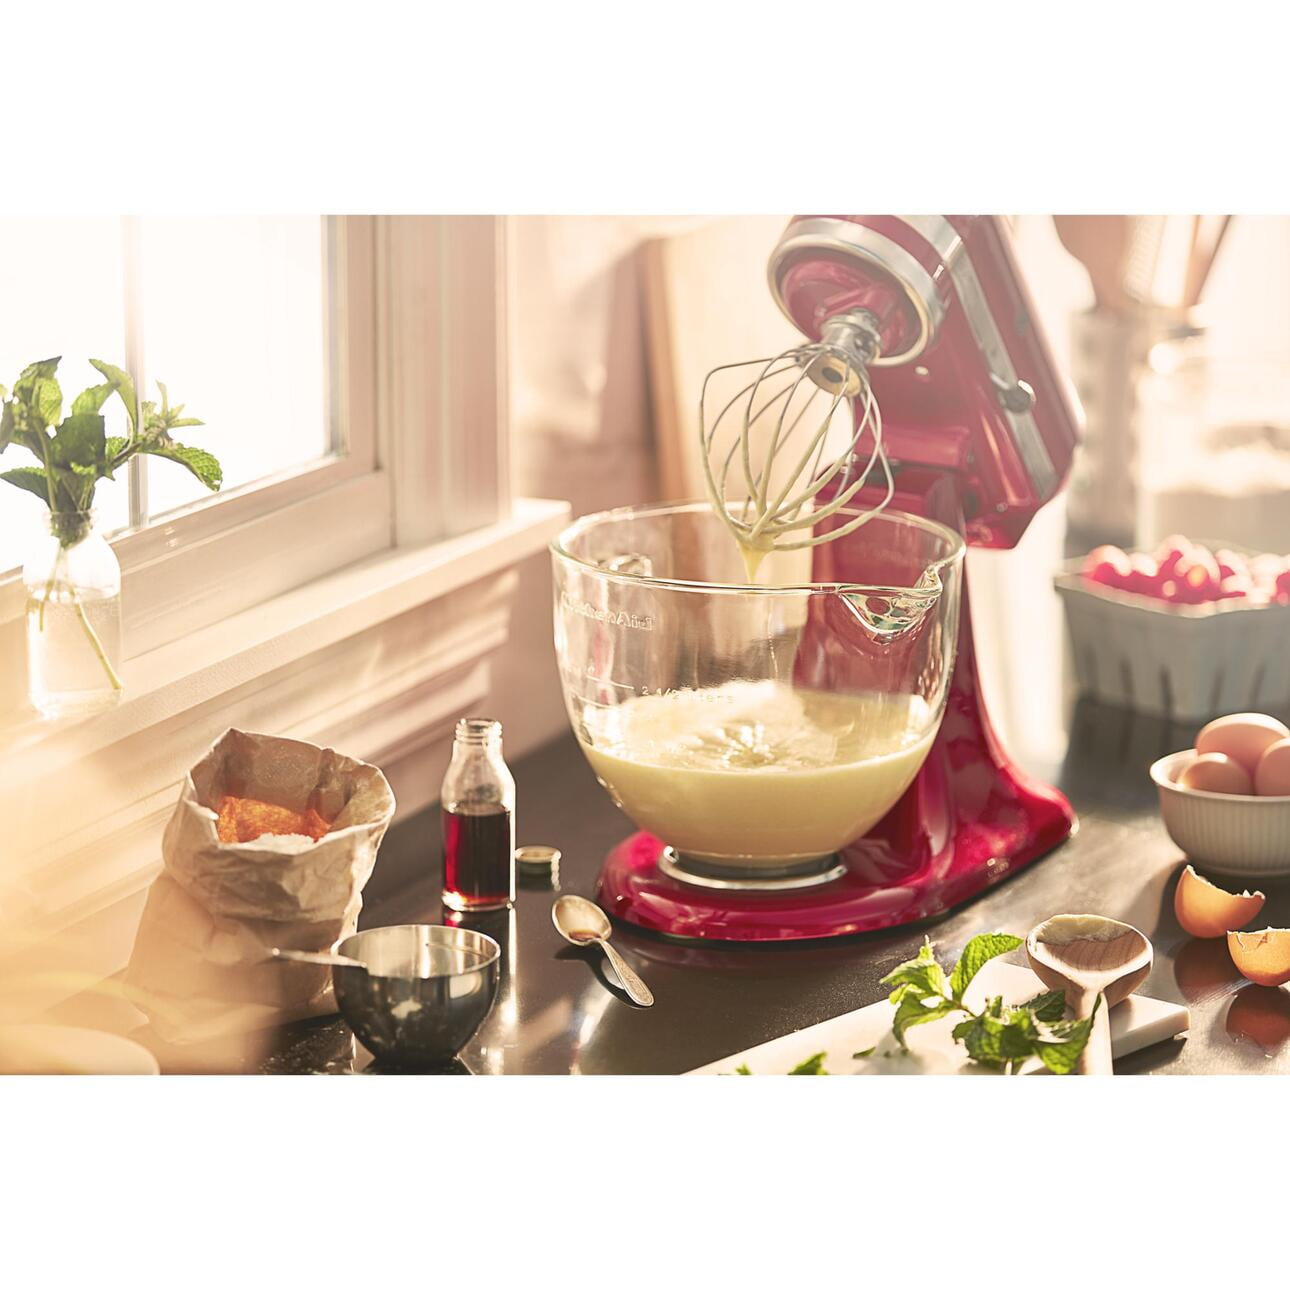 KitchenAid Artisan Design Series 5 Quart Tilt-Head Stand Mixer with Glass  Bowl - KSM155GB 